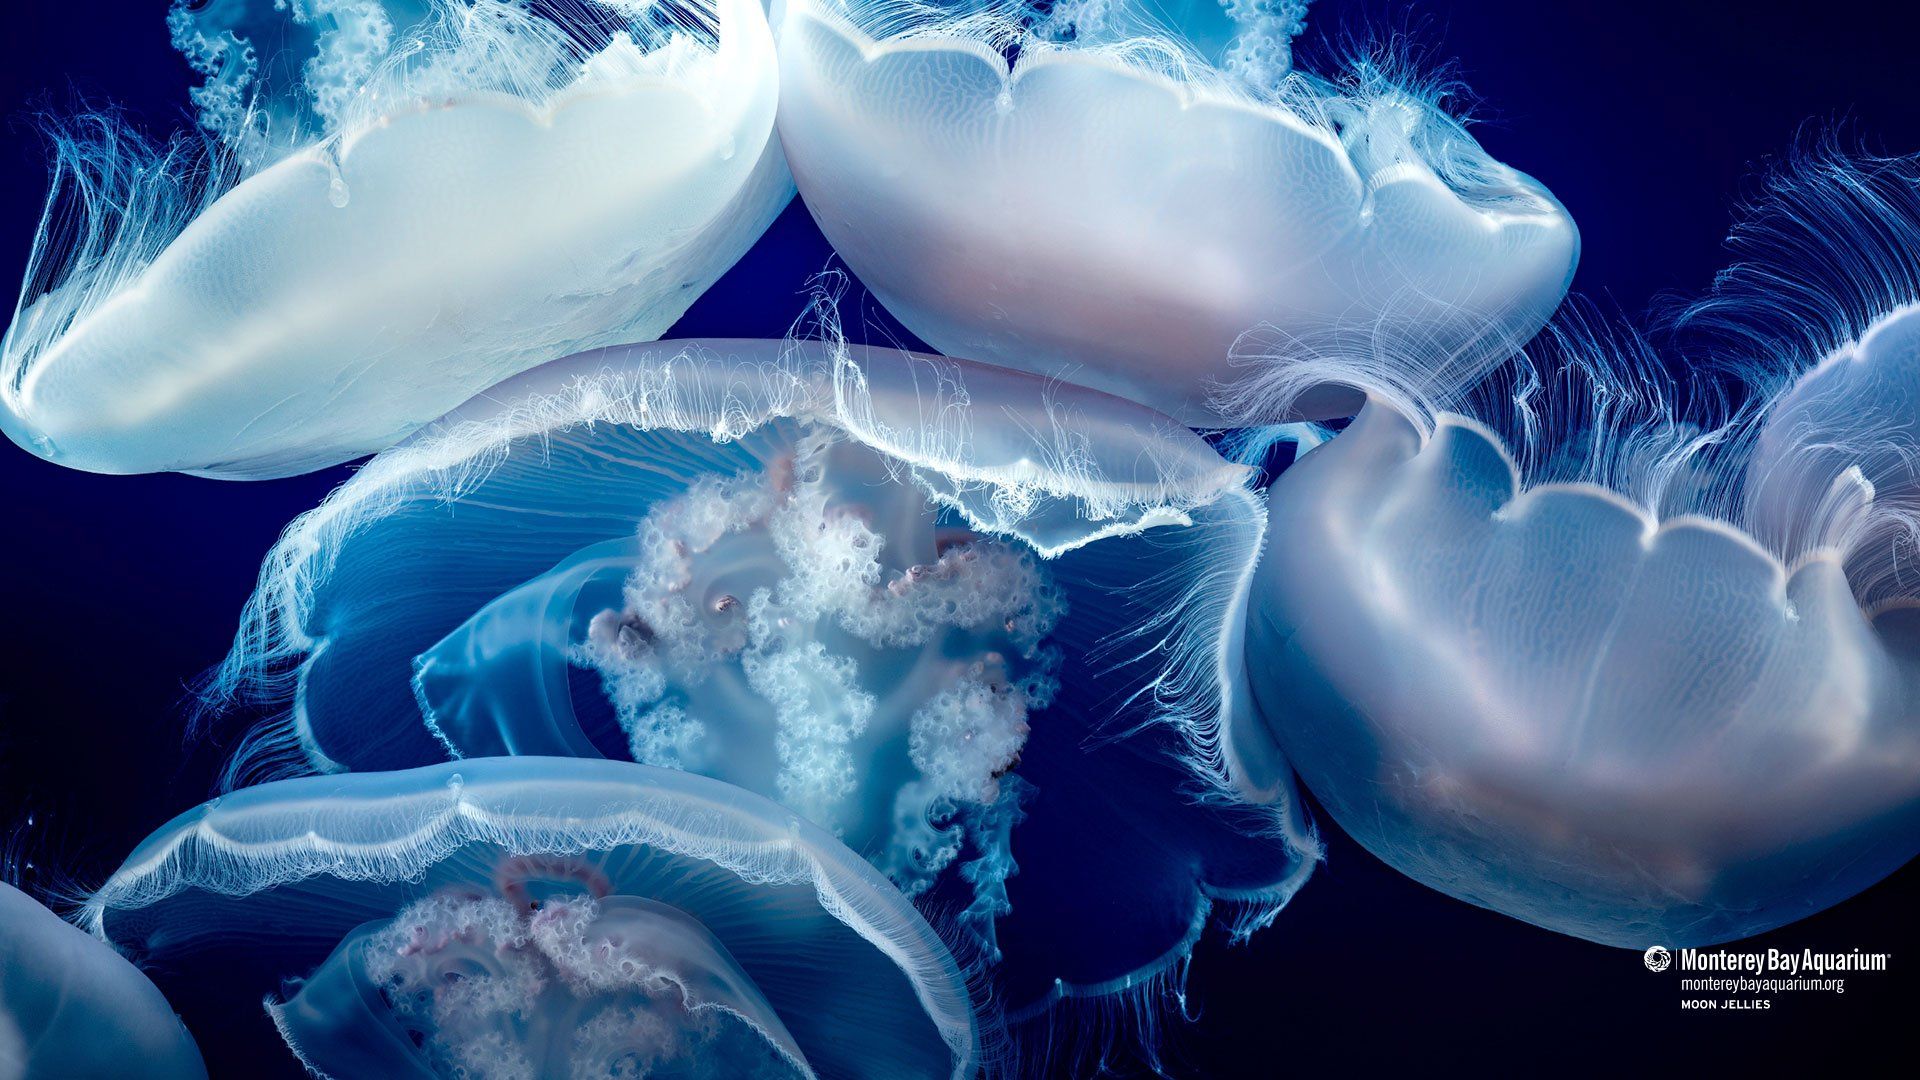 Moon jellies. Wallpaper. Monterey Bay Aquarium